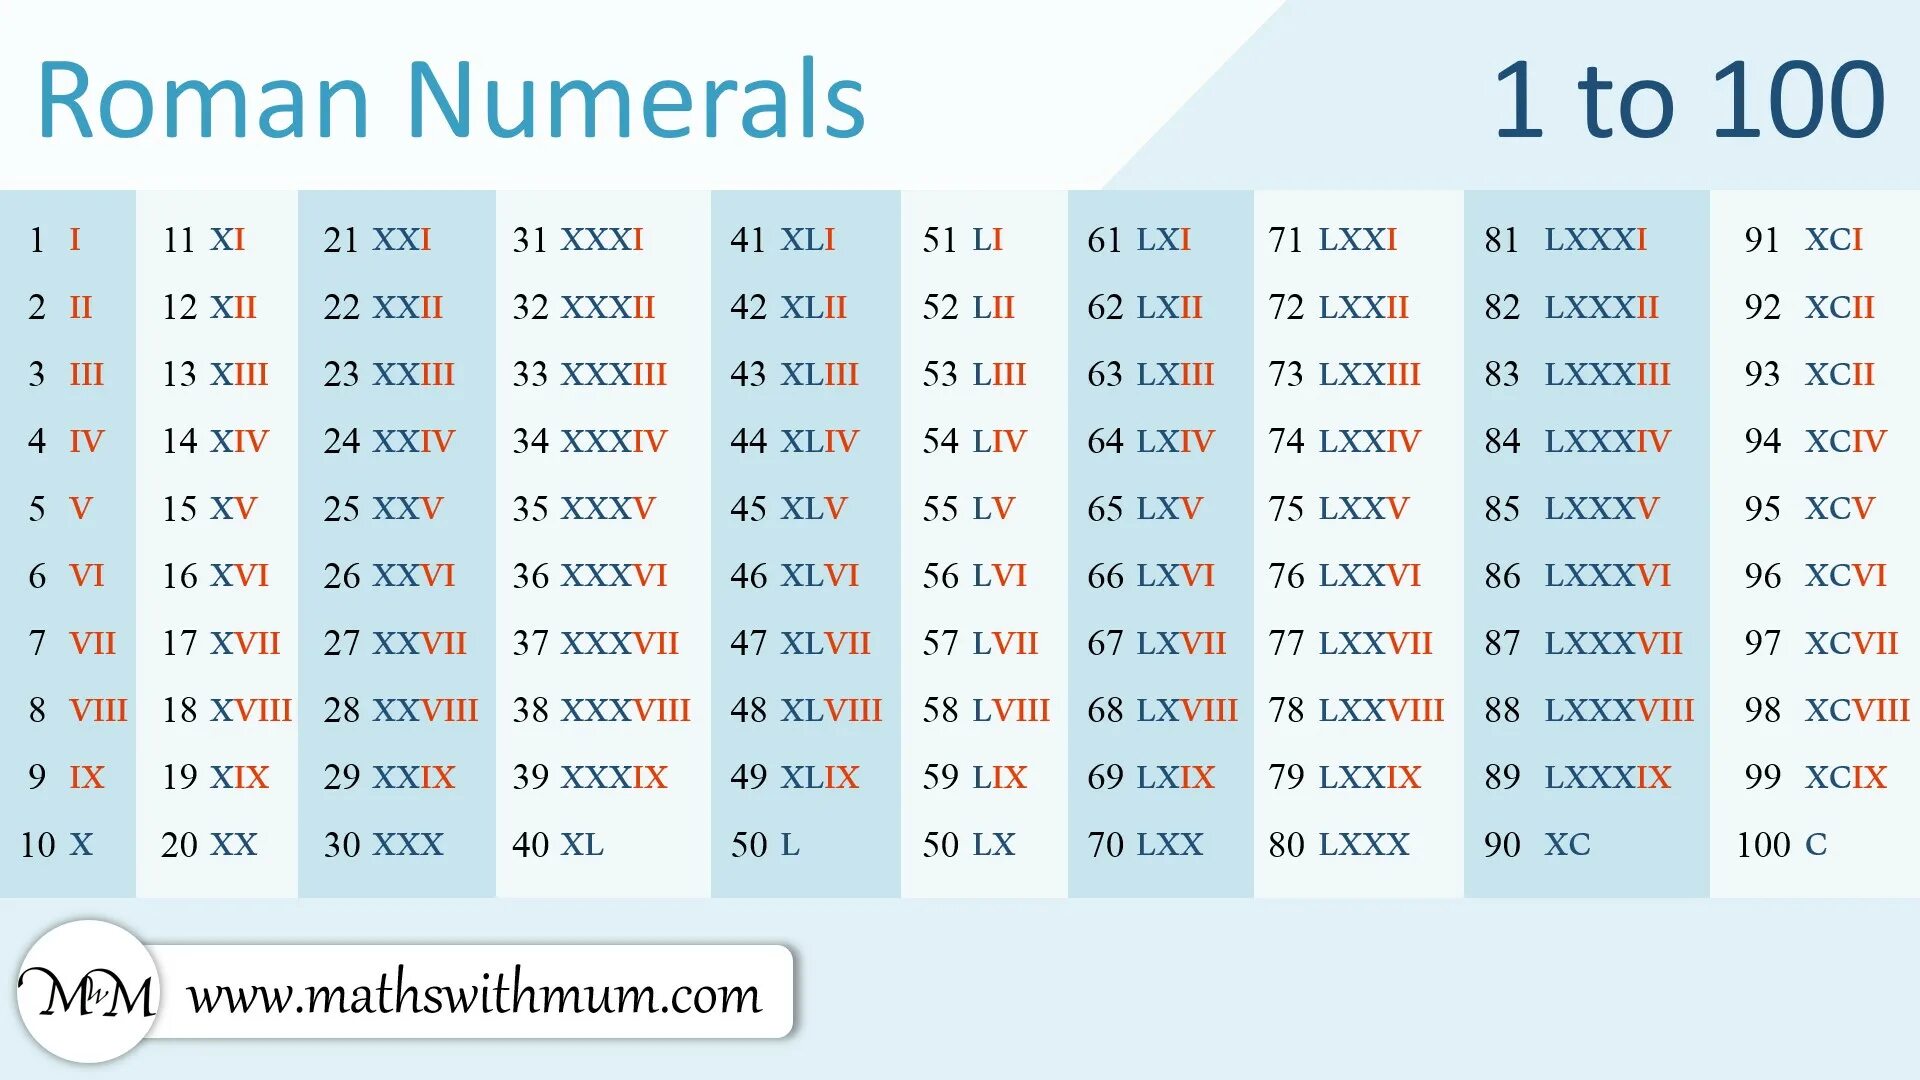 Арабско римская таблица. Таблица арабских цифр. Римские цифры от 1 до 100. Таблица римских цифр от 1 до 100. Римские числа от 0 до 100.